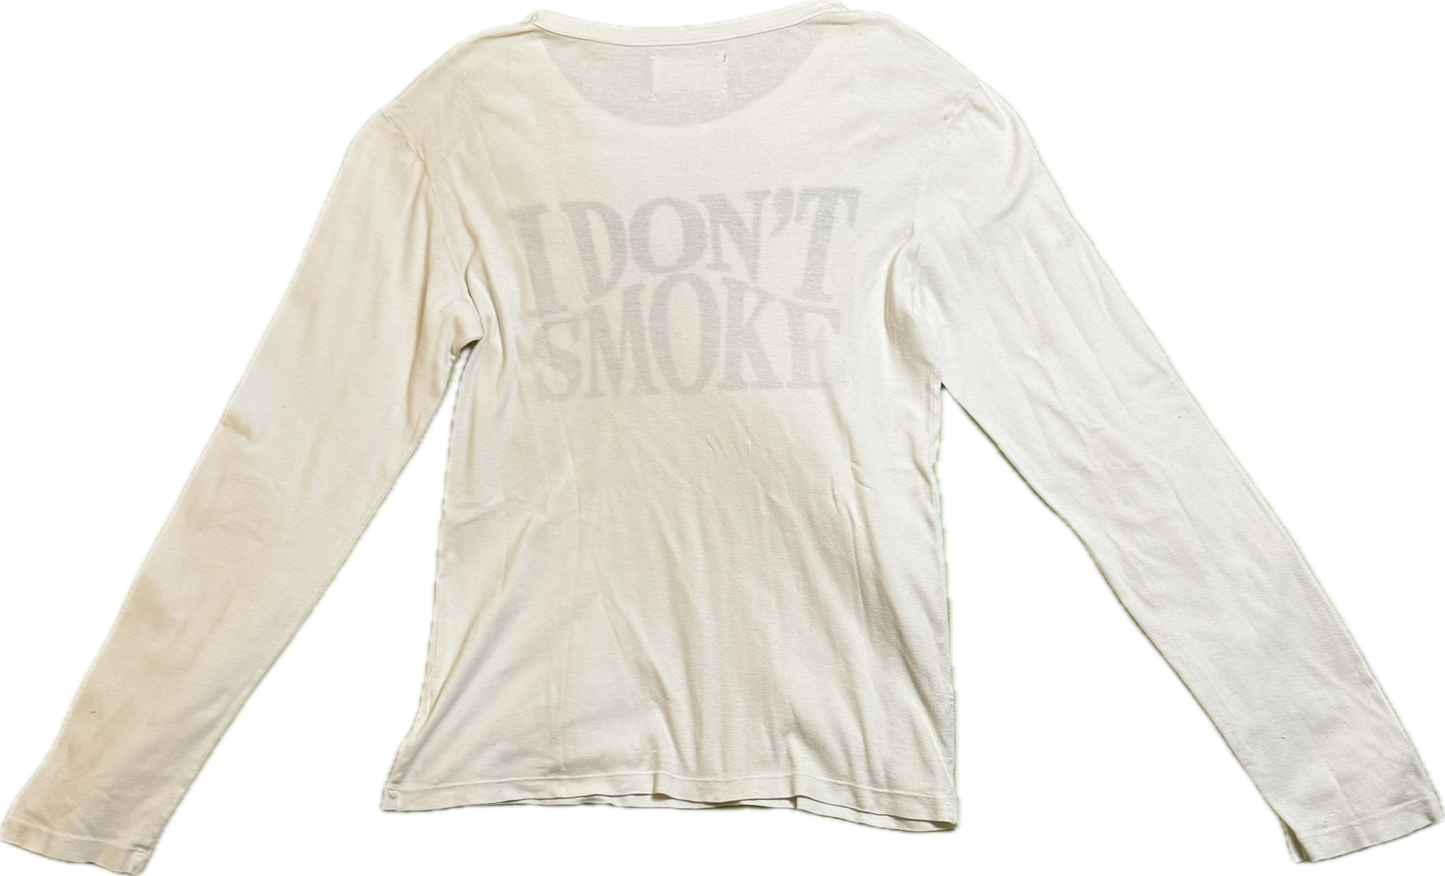 Maison Martin Margiela AW 2006 "I Don't Smoke" Inside Out Long Sleeve Shirt